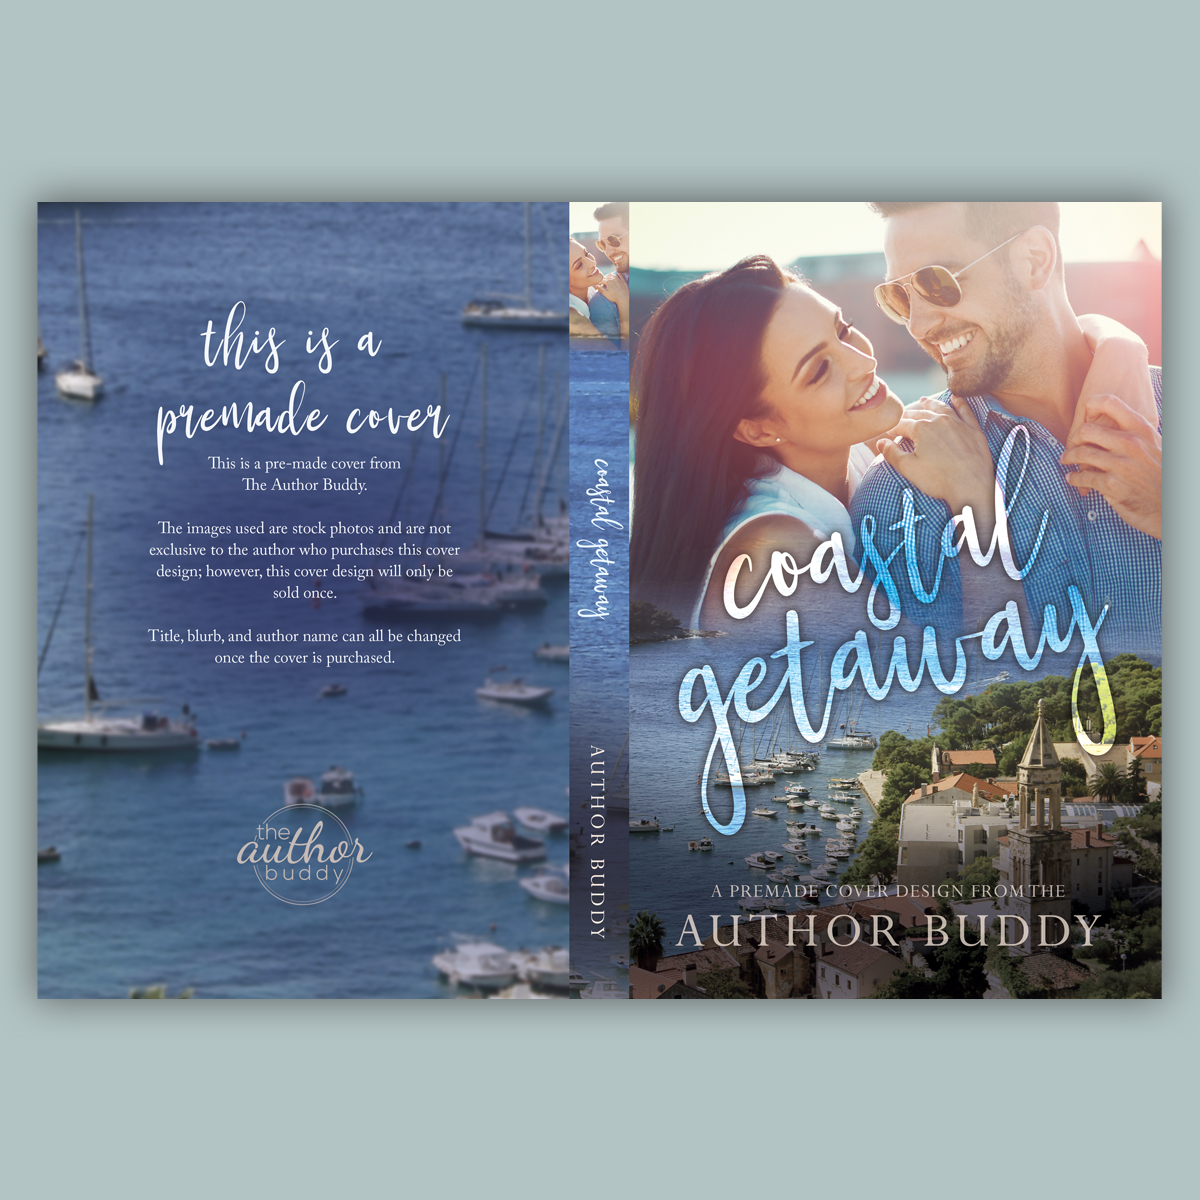 Coastal Getaway - Premade Contemporary Romance Book Cover from The Author Buddy